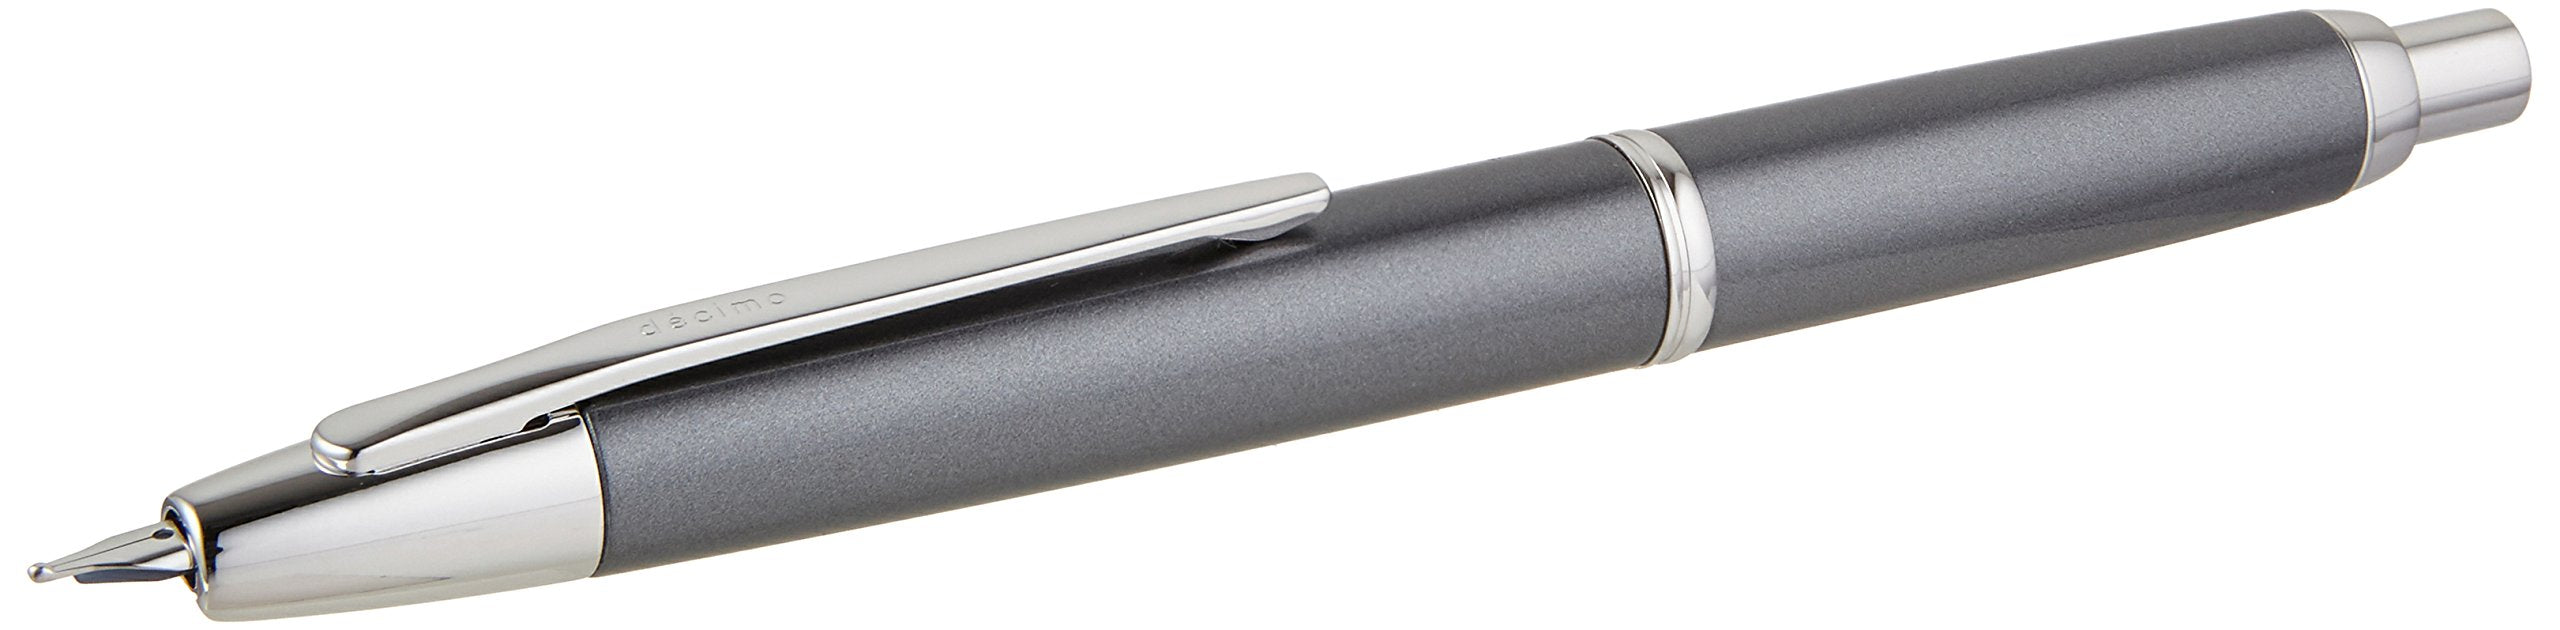 Pilot Decimo Fountain Pen Bold Point Capless Design with Dark Gray Mica Shaft